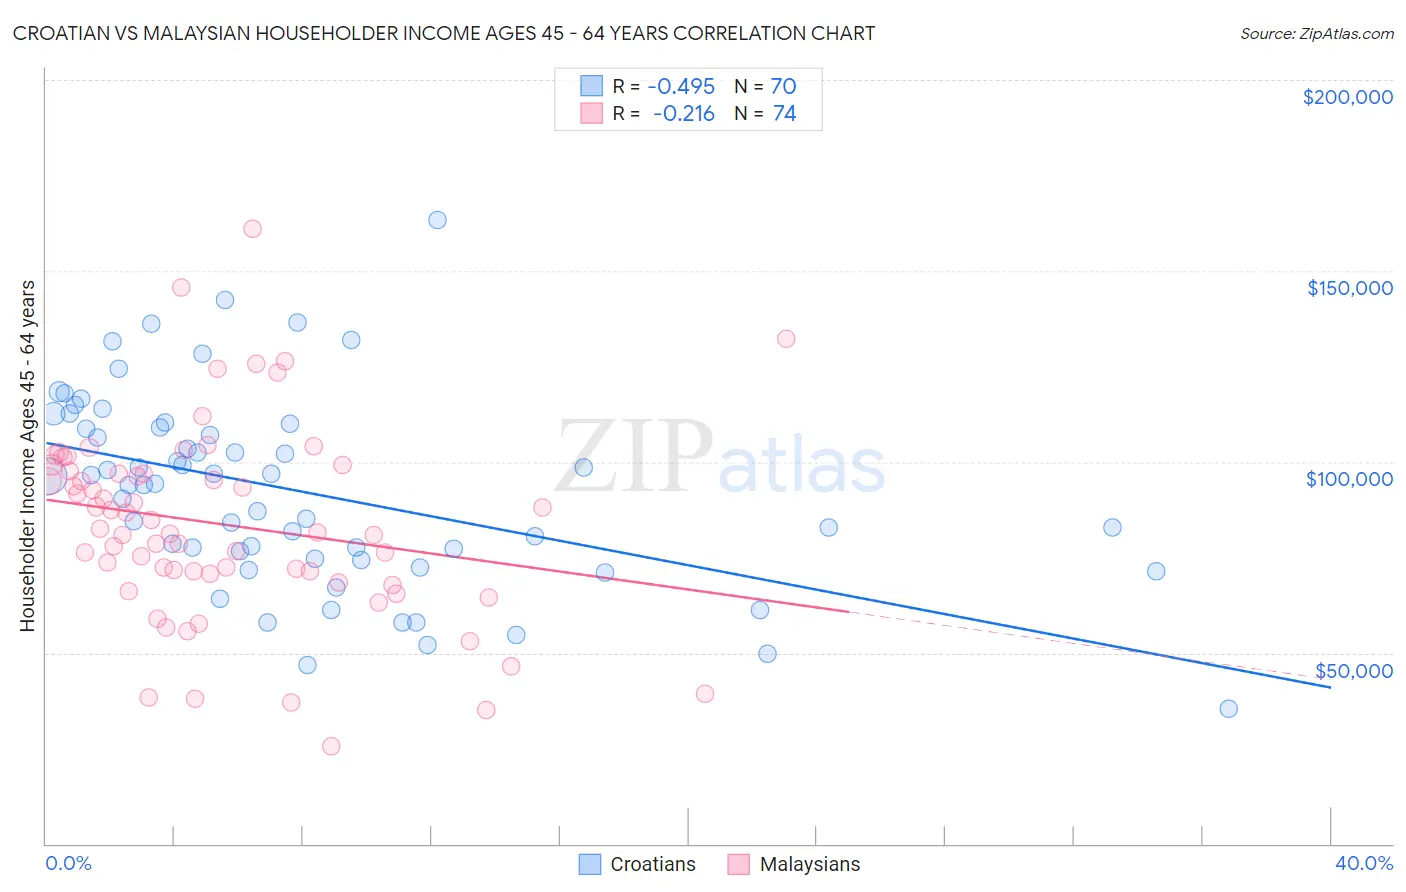 Croatian vs Malaysian Householder Income Ages 45 - 64 years